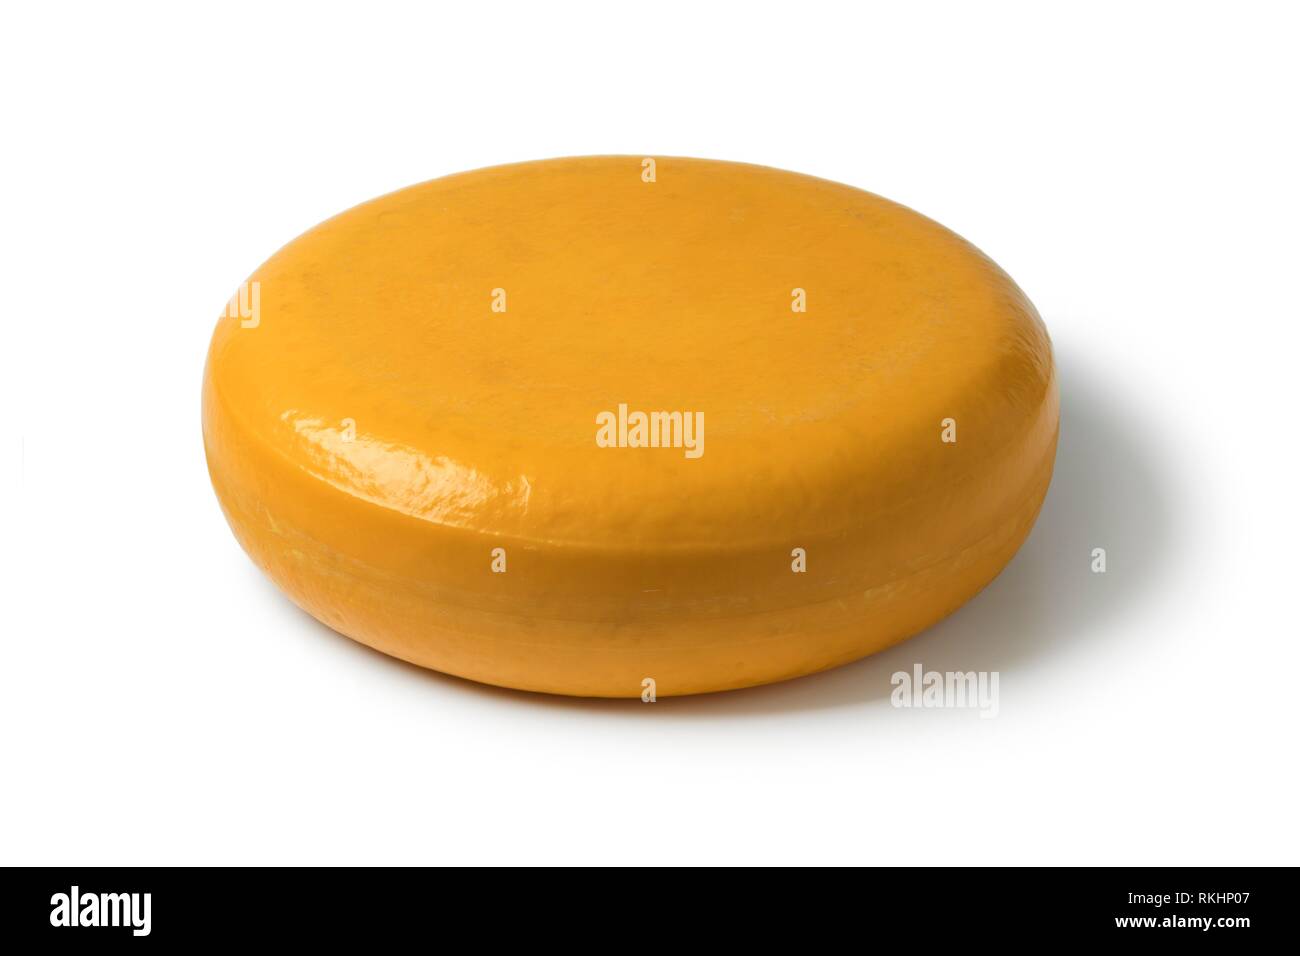 Whole round yellow Gouda cheese isolated on white background. Stock Photo